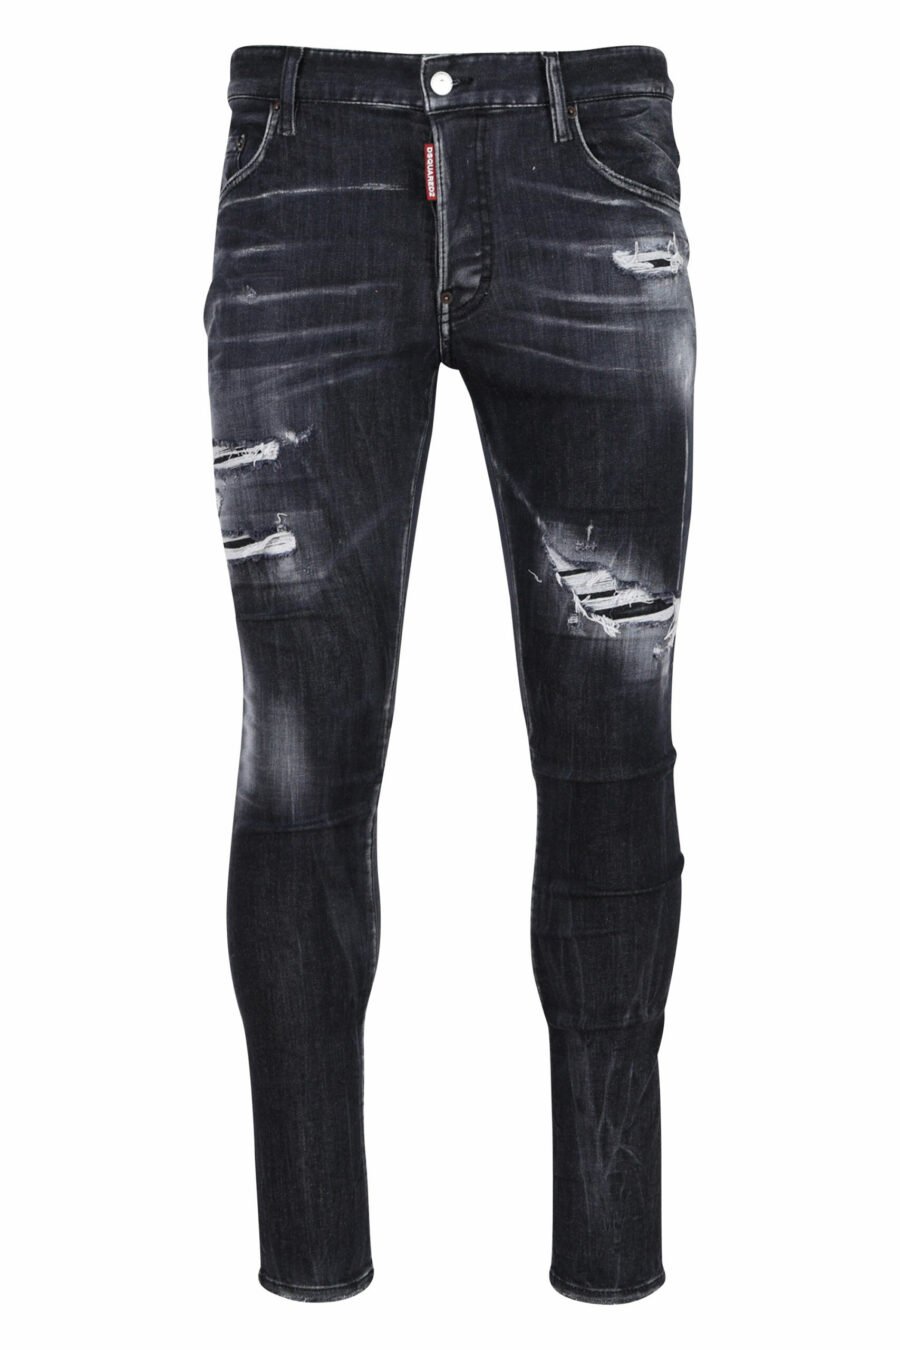 Super twinkey jeans black semi-worn and ripped - 8054148103088 scaled